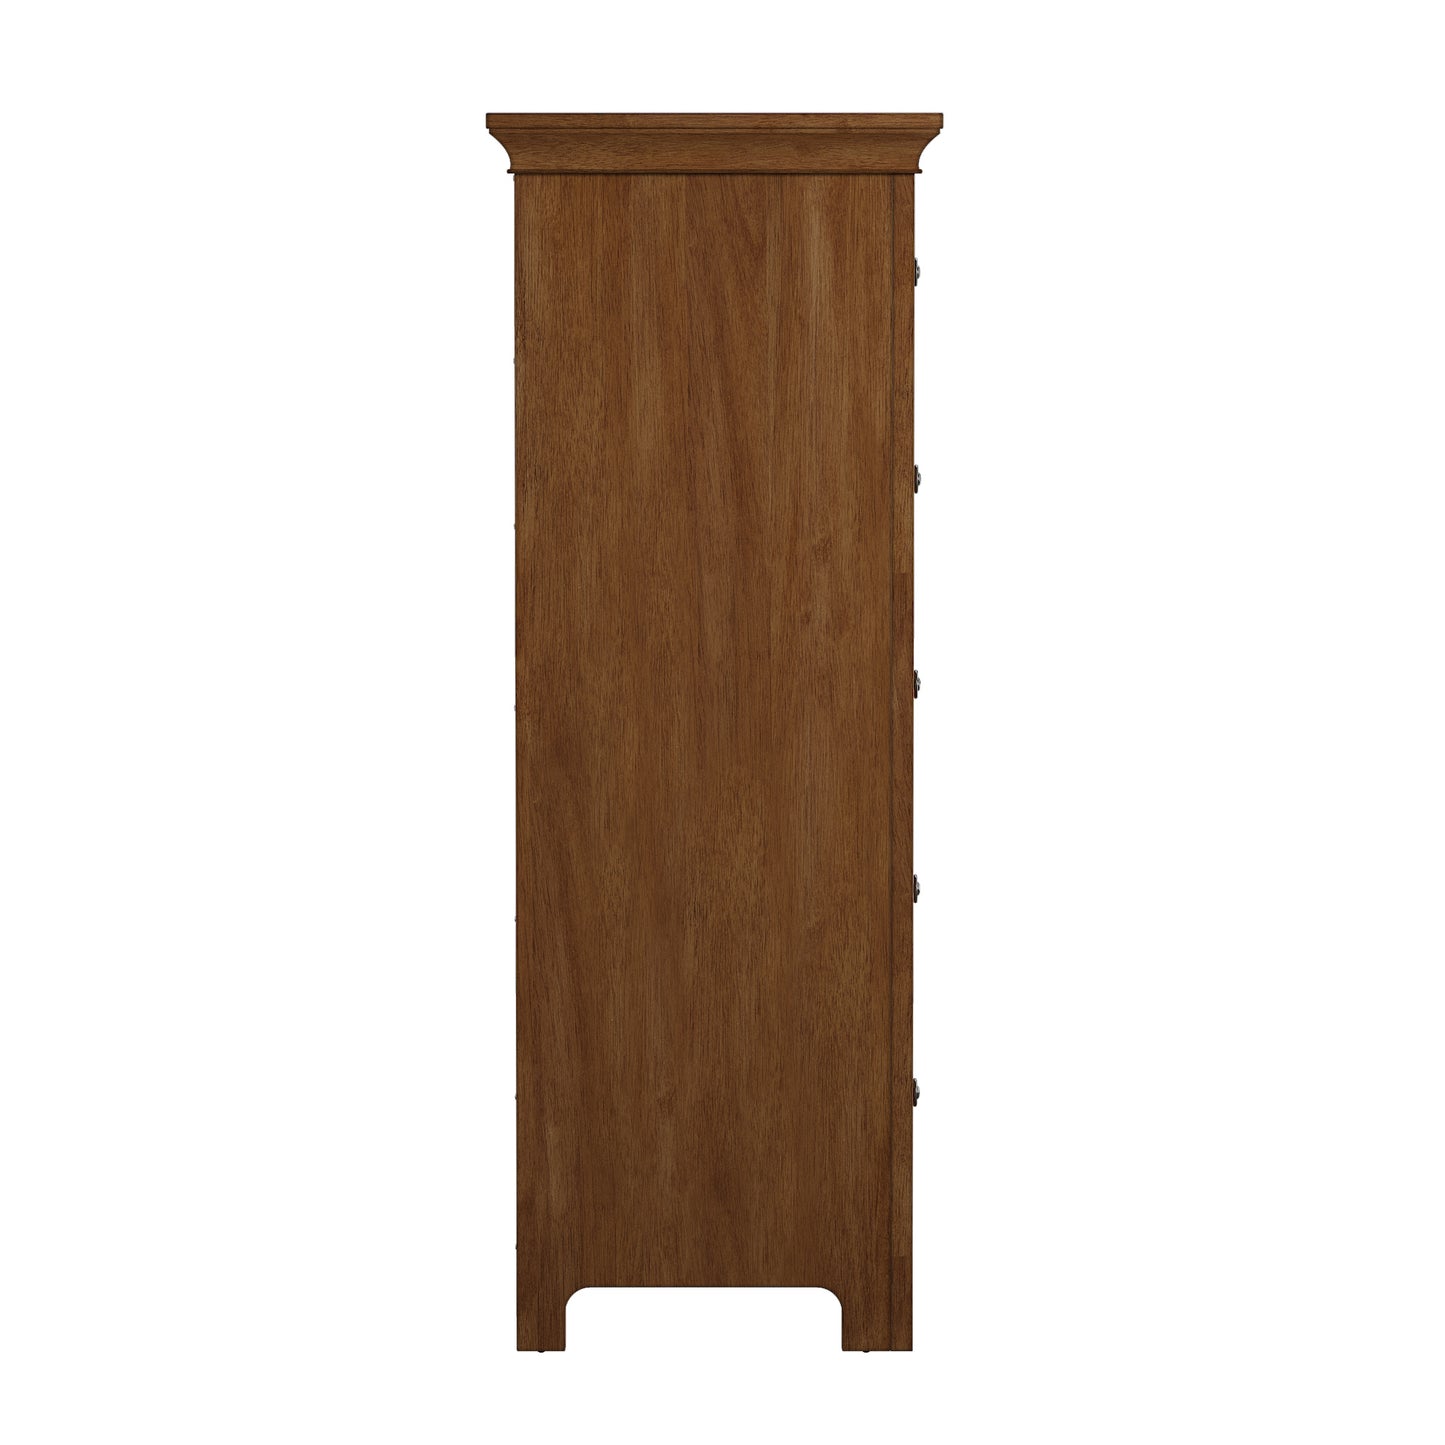 5-Drawer Wood Modular Storage Chest - Oak Finish